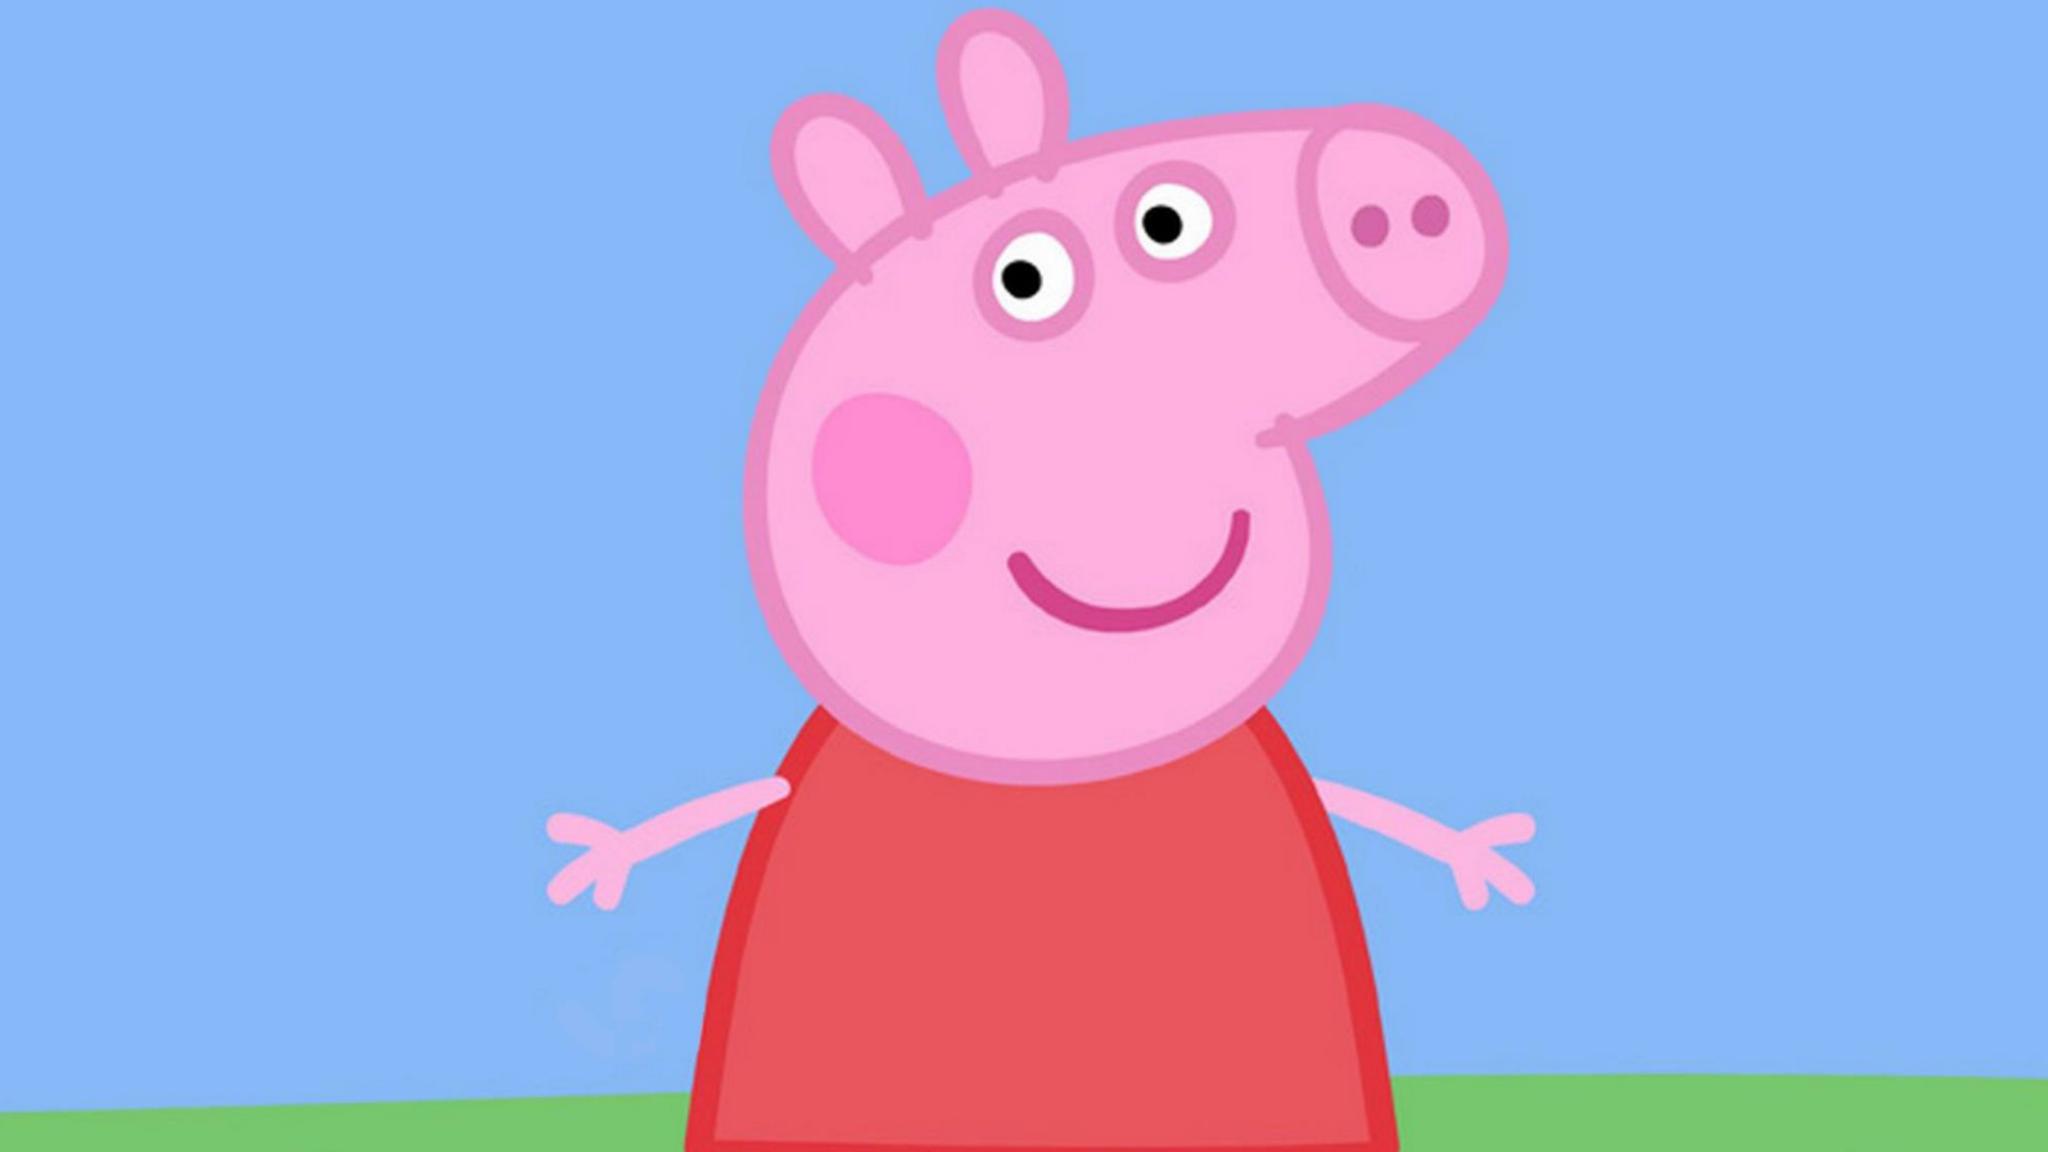 Peppa Is a Brat': Parents Turn on the Cheeky Preschooler Pig - WSJ